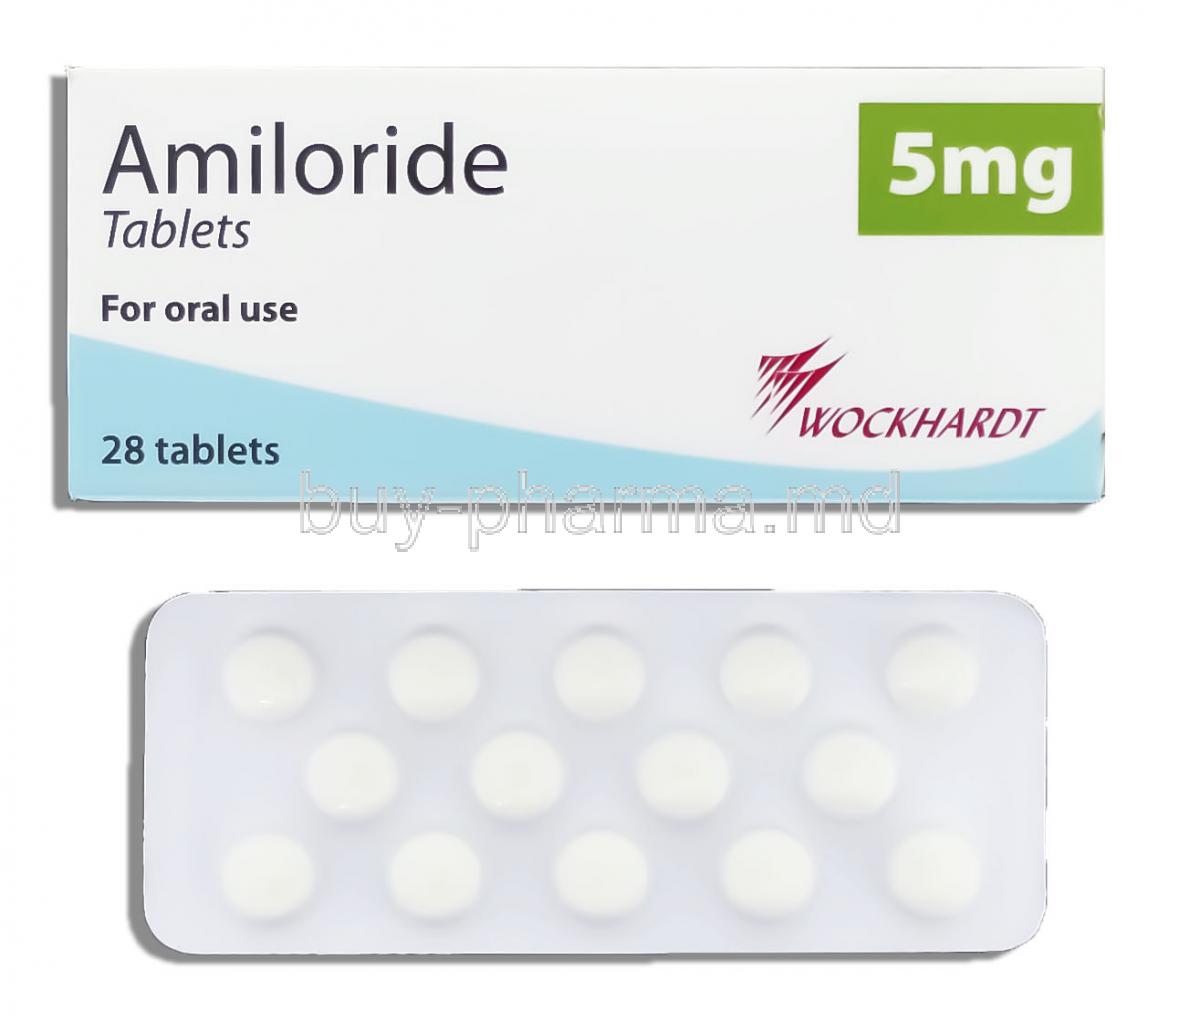 Generic Midamor, Amiloride 5 mg, Box and Blister